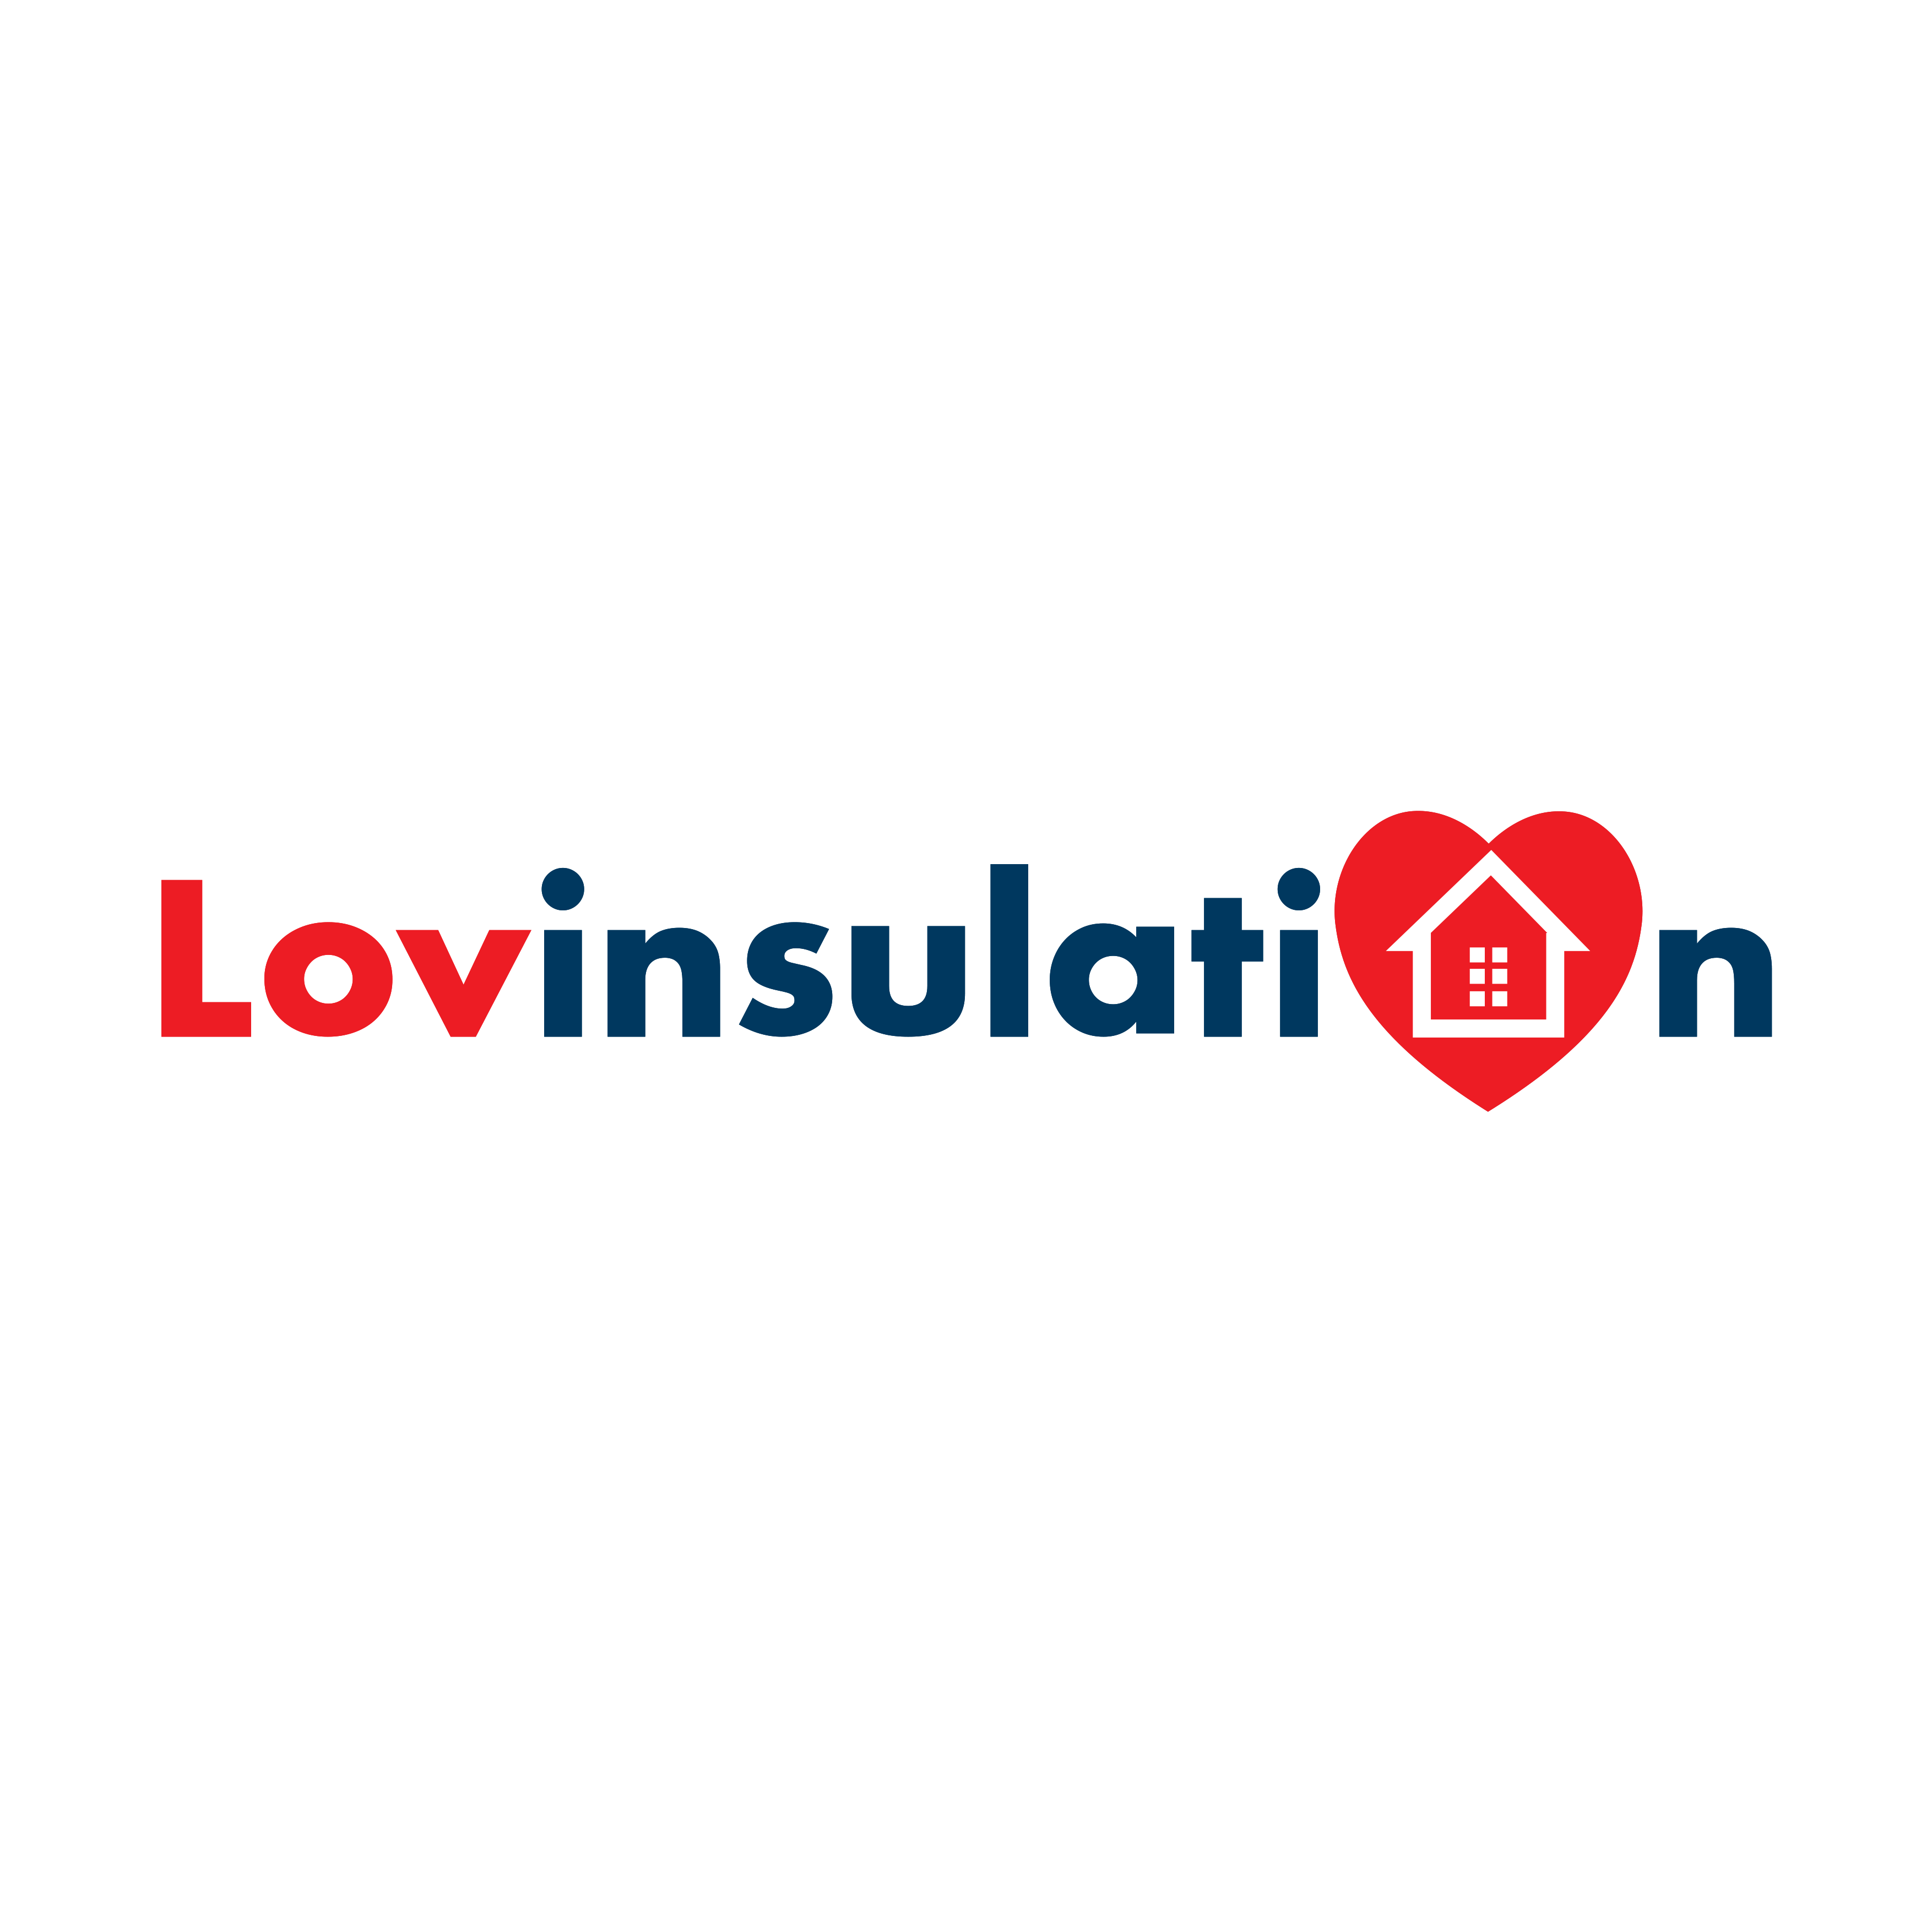 Lovinsulation Ltd